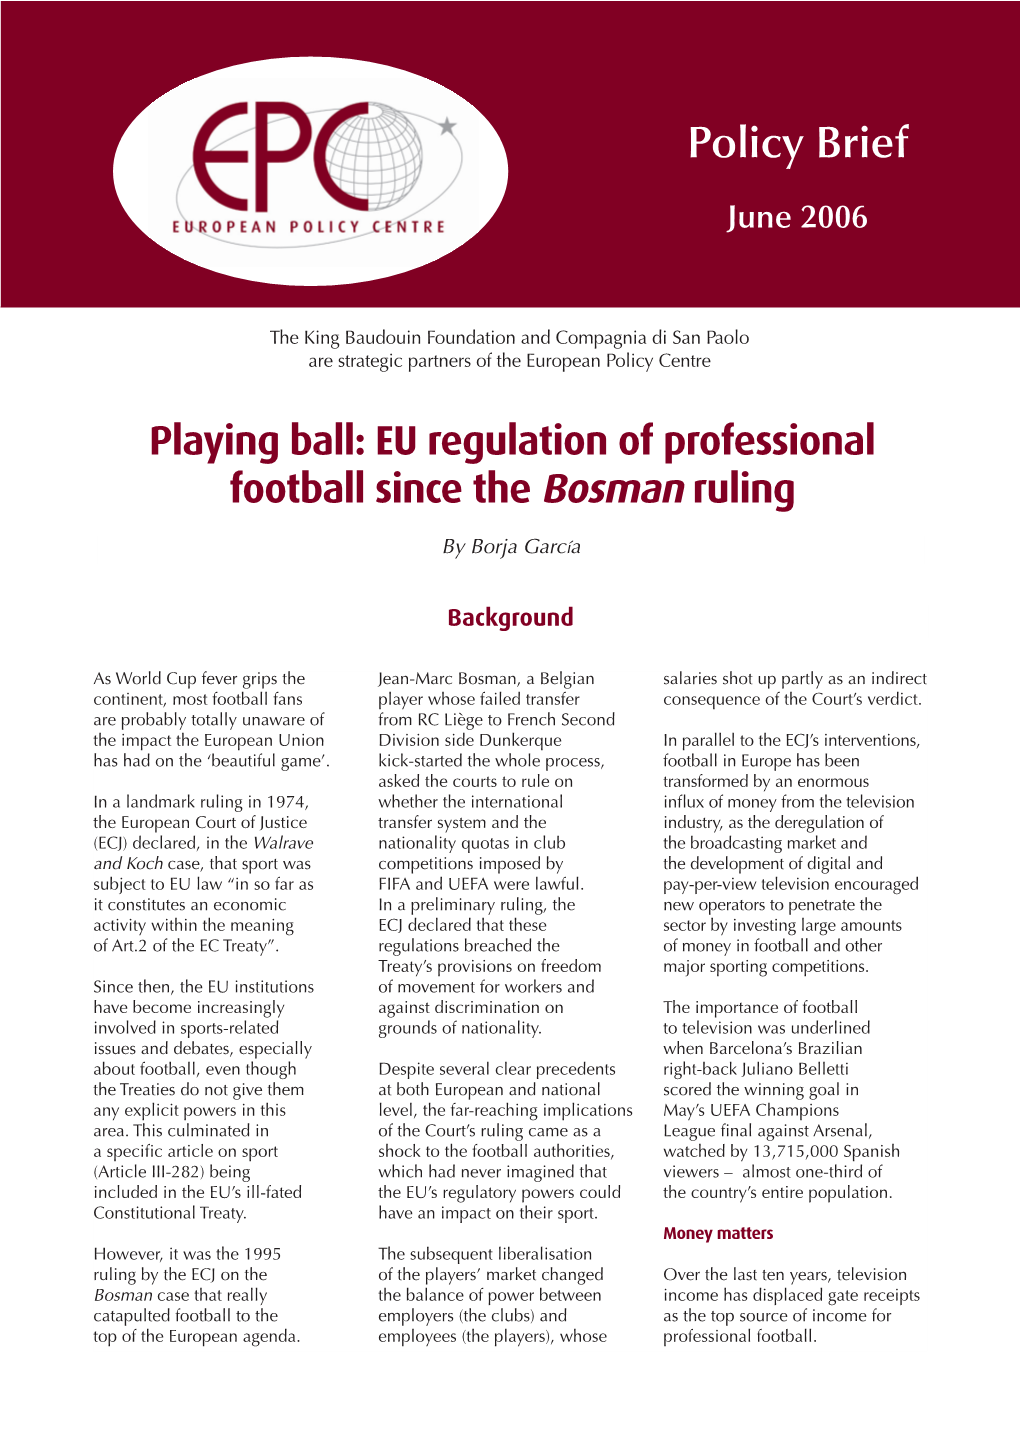 EU Regulation of Professional Football Since the Bosman Ruling